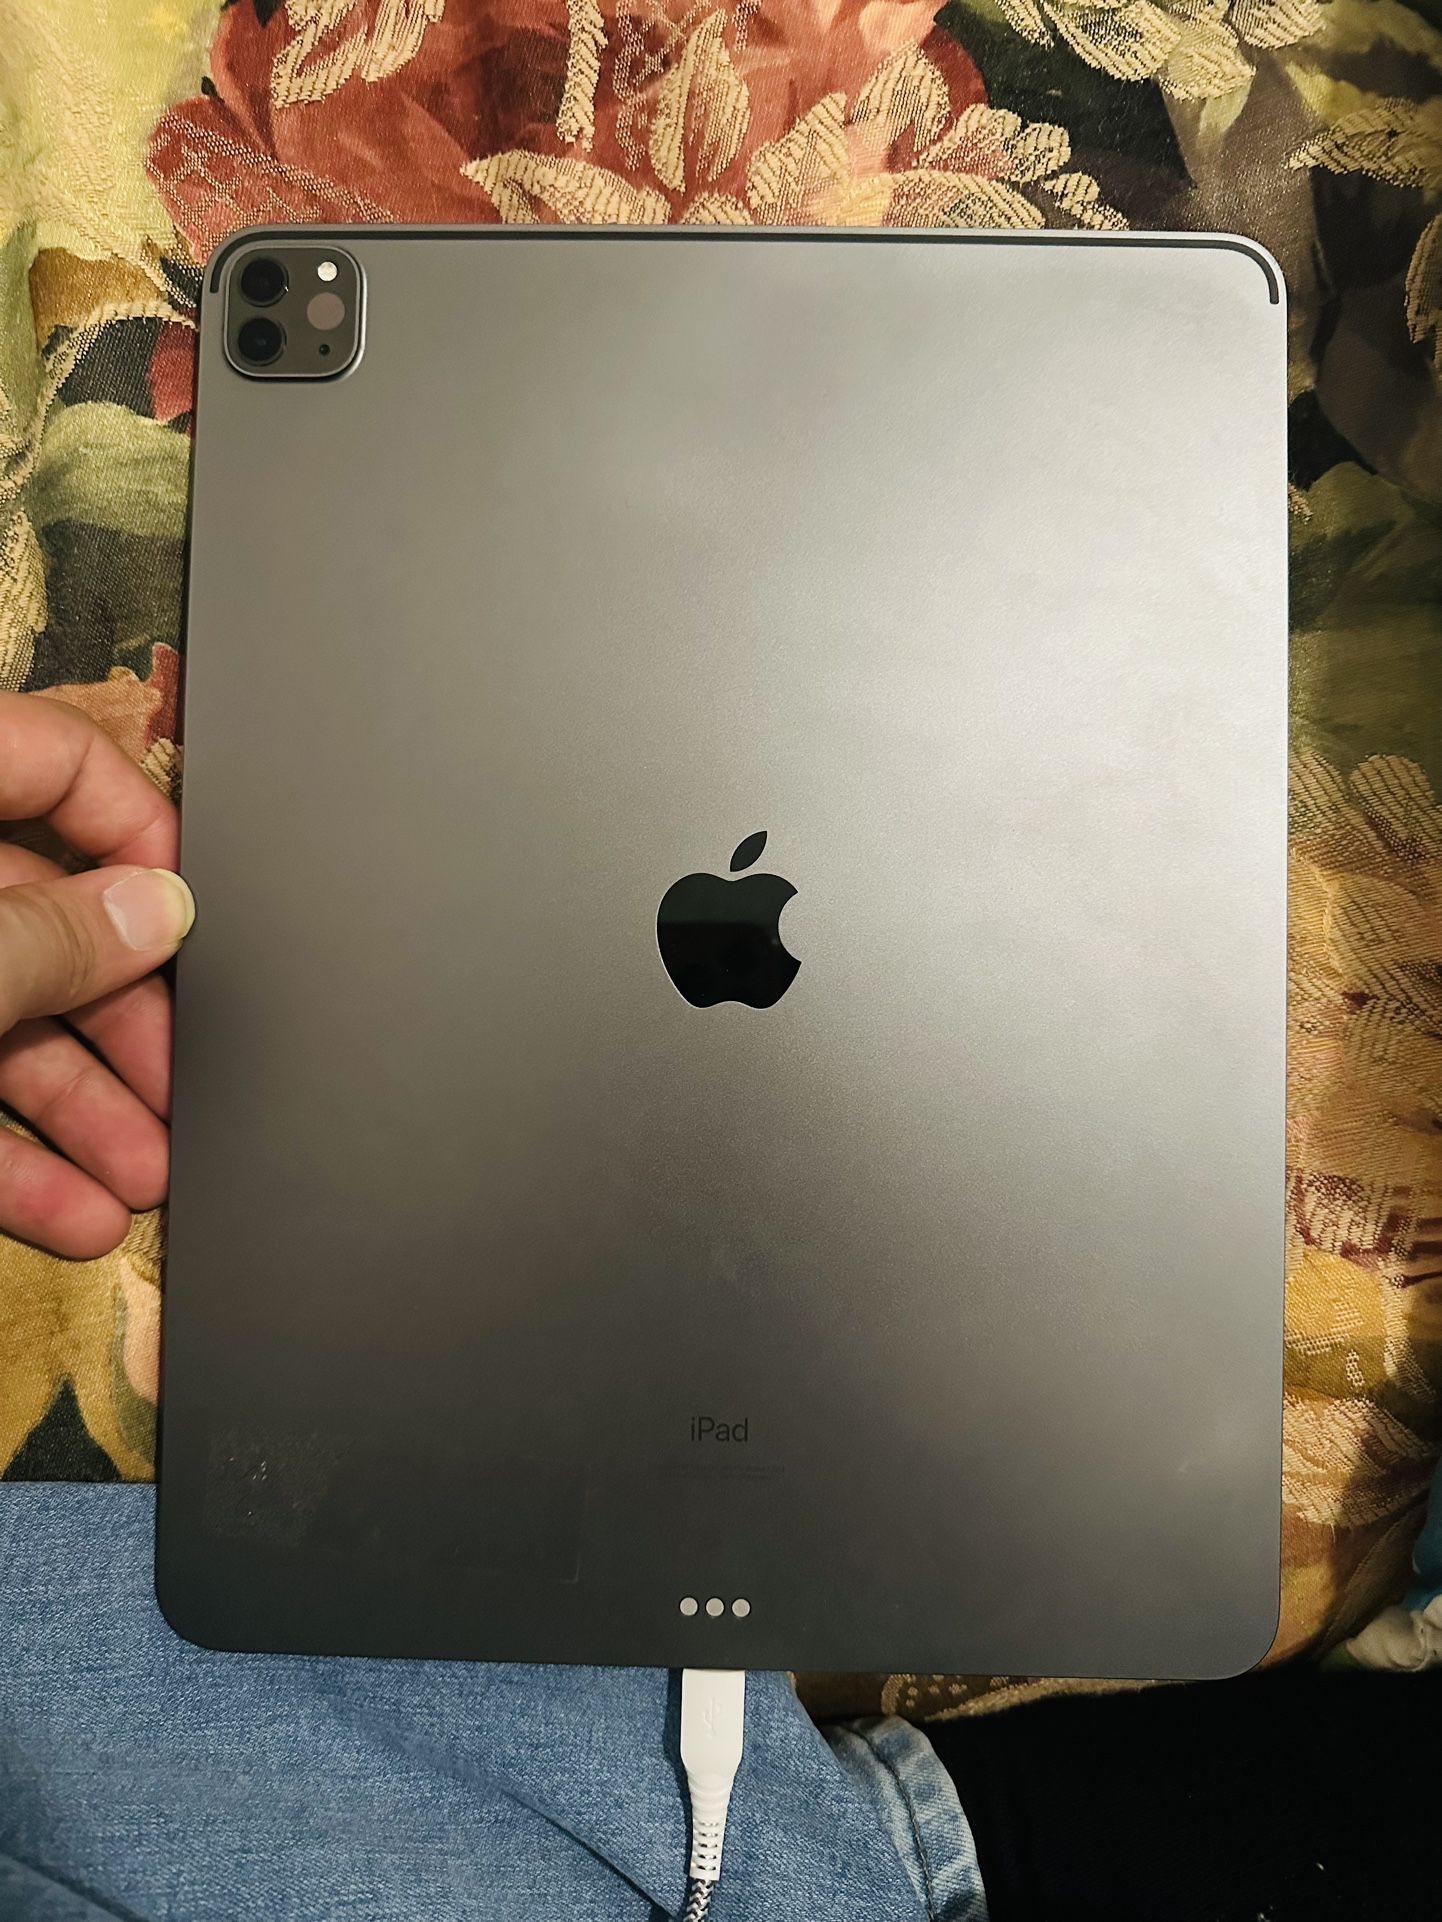 iPad Pro 12.9 Inch (5th Generation) 256GB